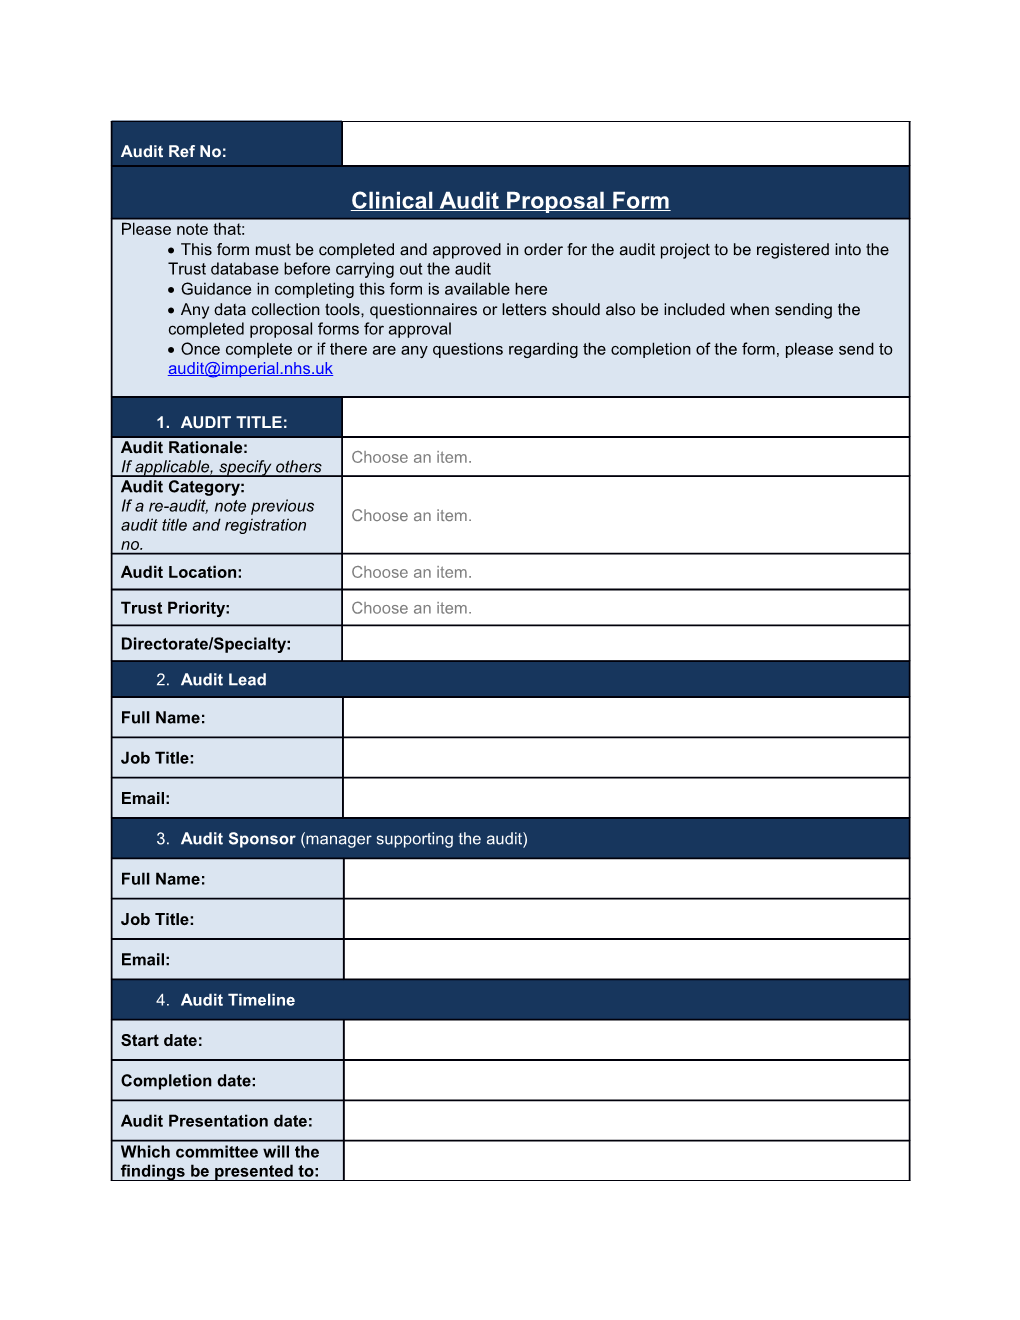 Clinical Audit Proposal Form